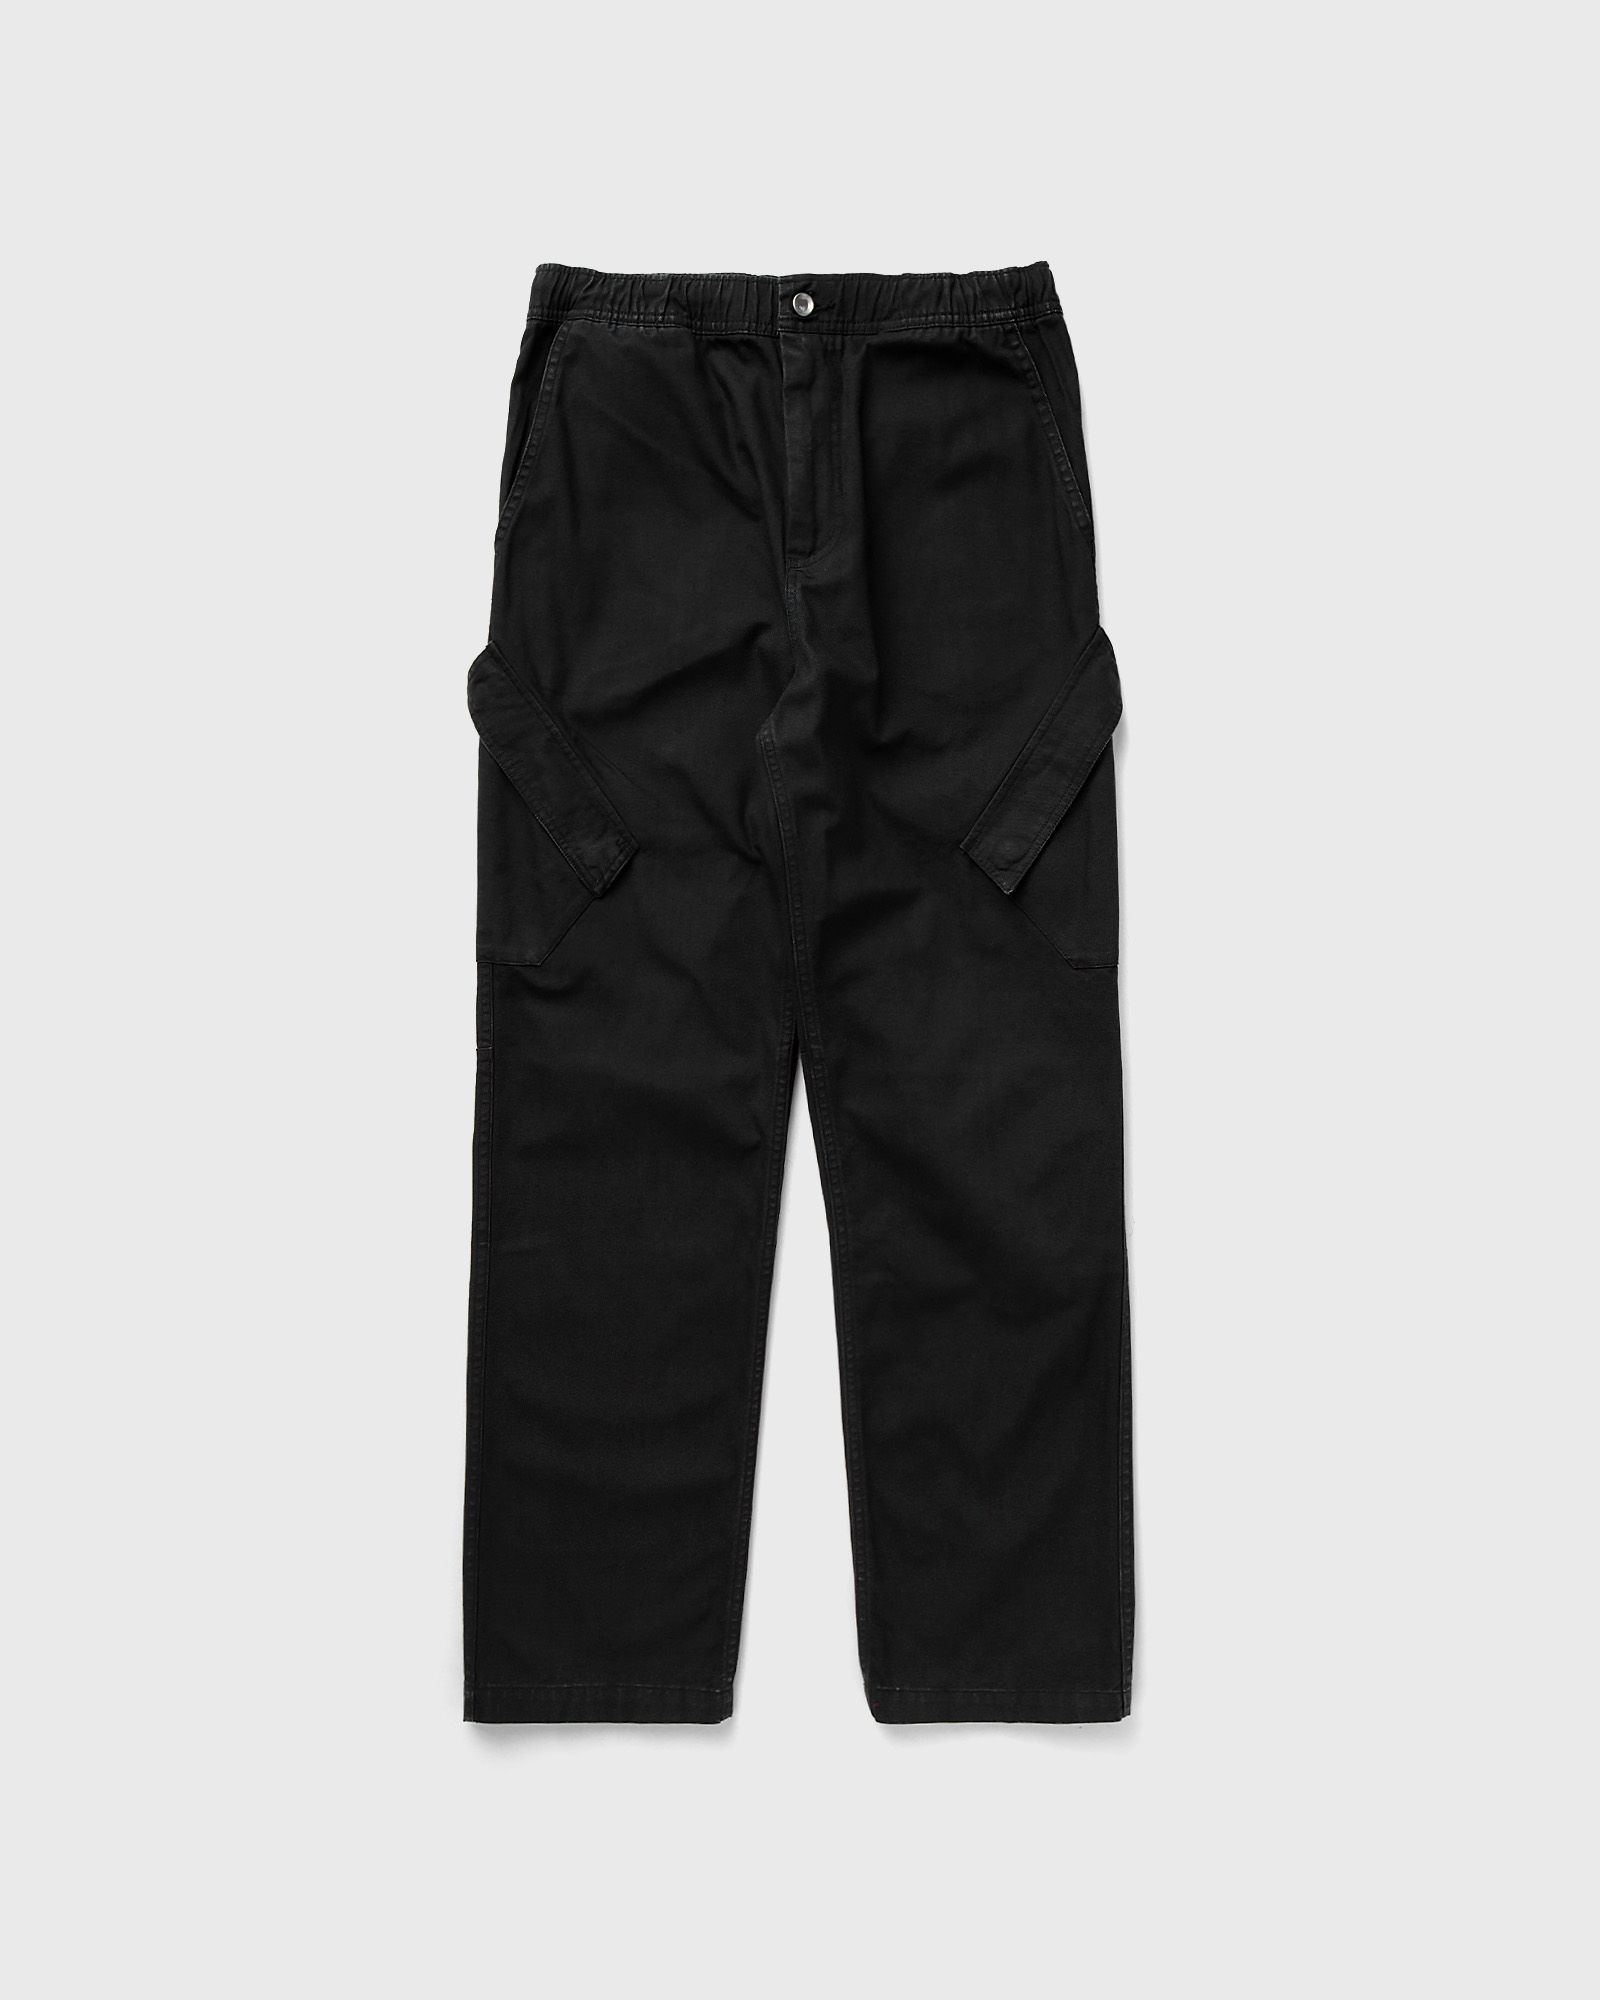 Jordan - essentials chicago pants men cargo pants black in größe:xxl